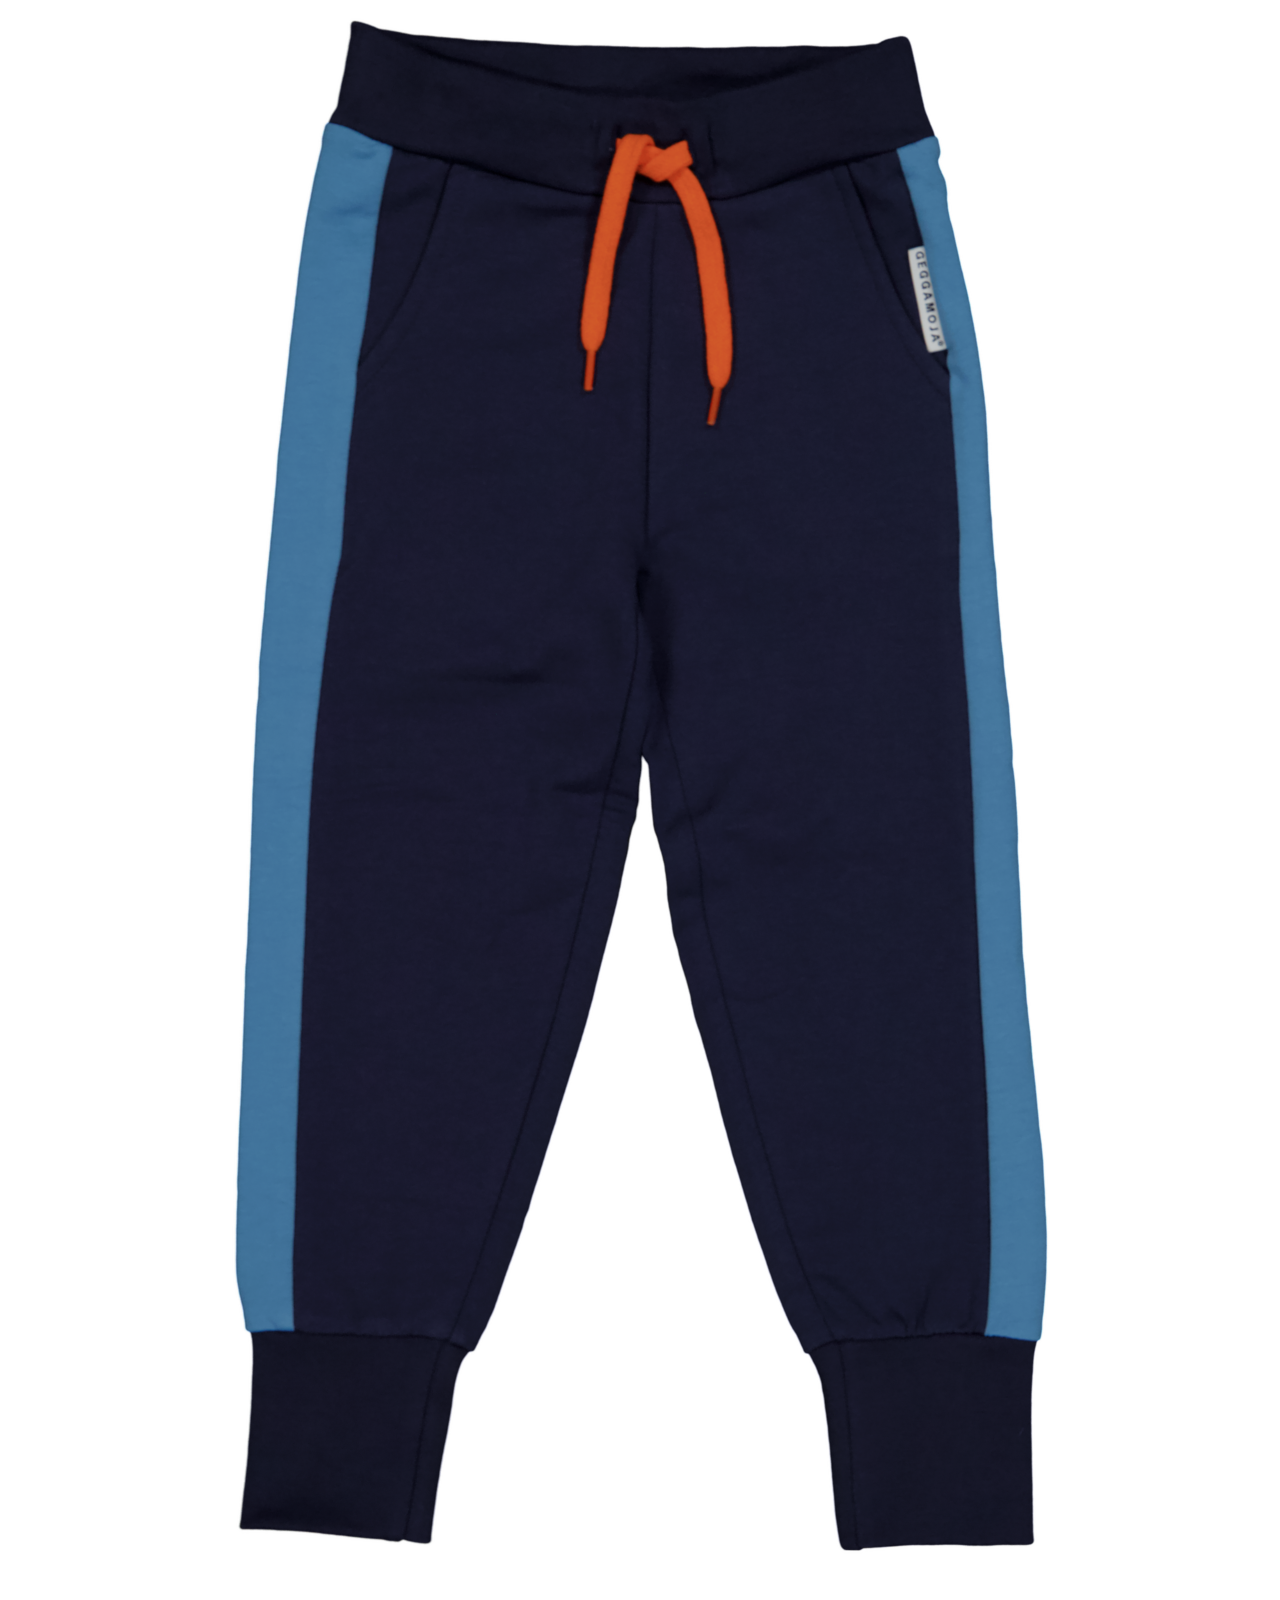 College pants Navy 110/116